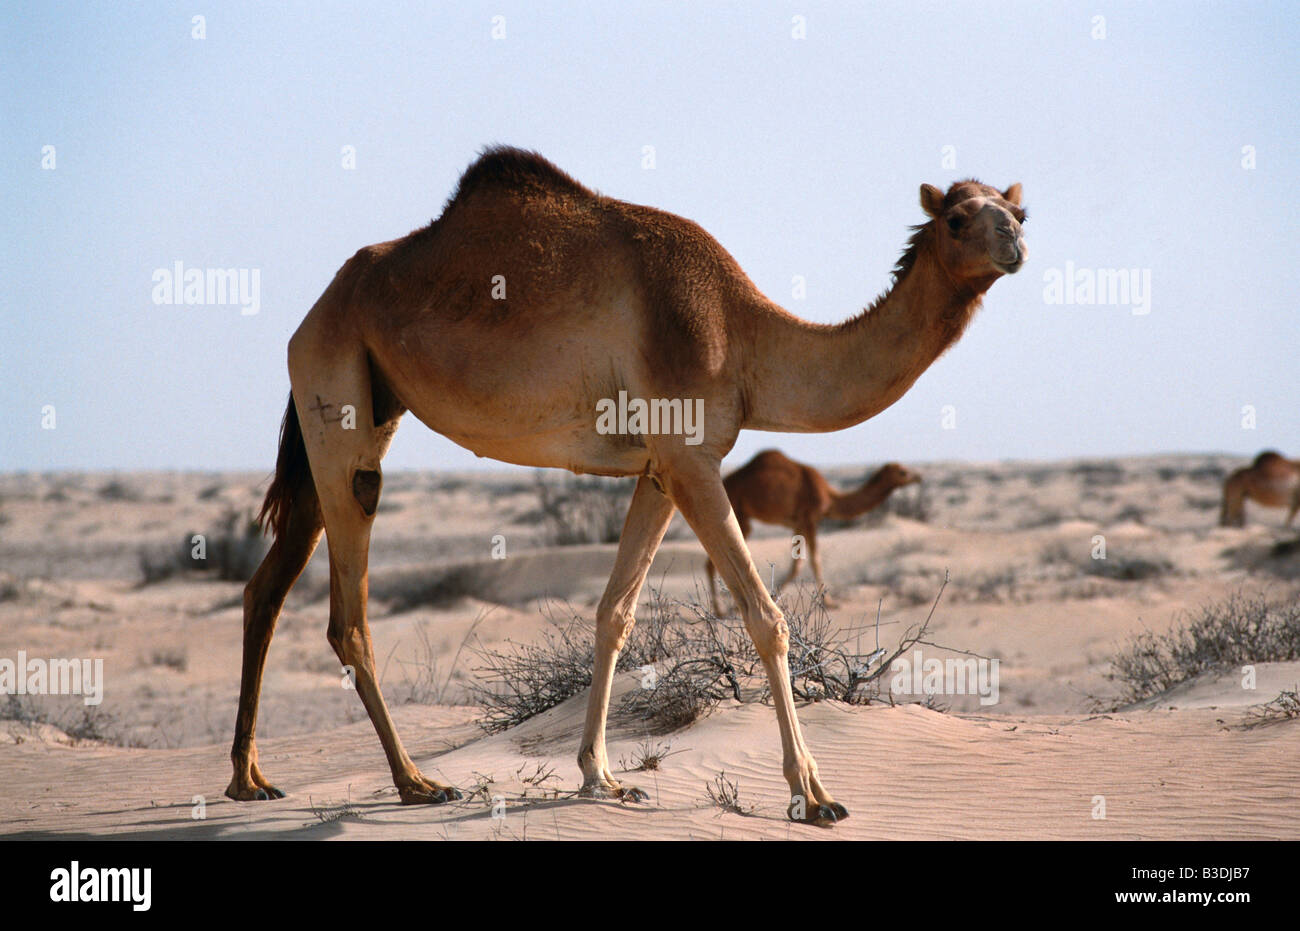 Kamele Karawane Kamel Wuestenschiff Camel Kamel camelus dromedarius Dromedar einhoeckriges Kamel Arabian dromedario camel Foto Stock